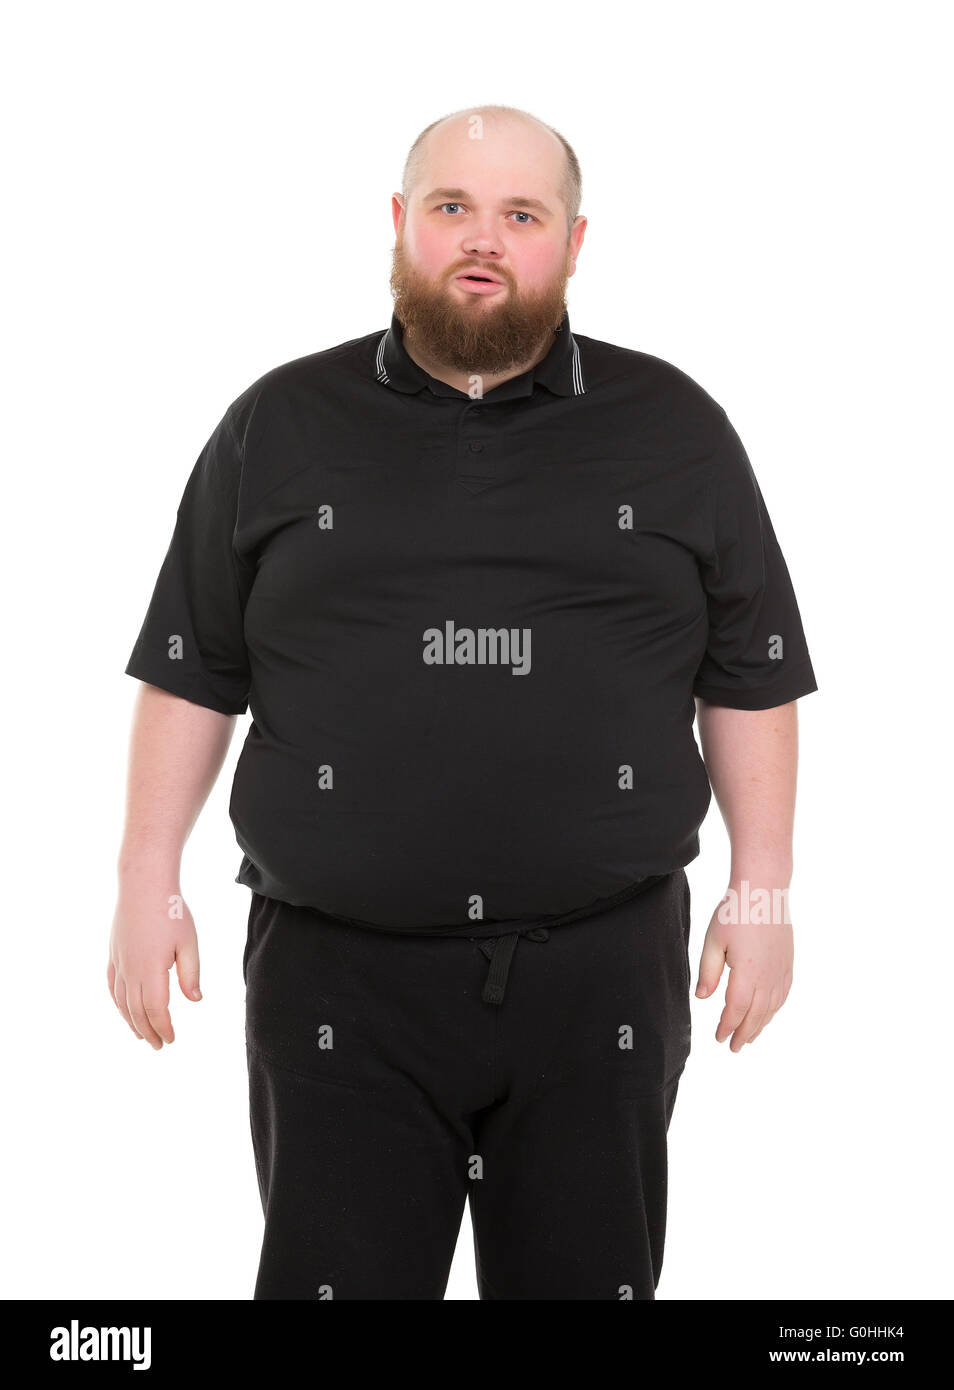 Bearded Fat Man in a Black Shirt Stock Photo